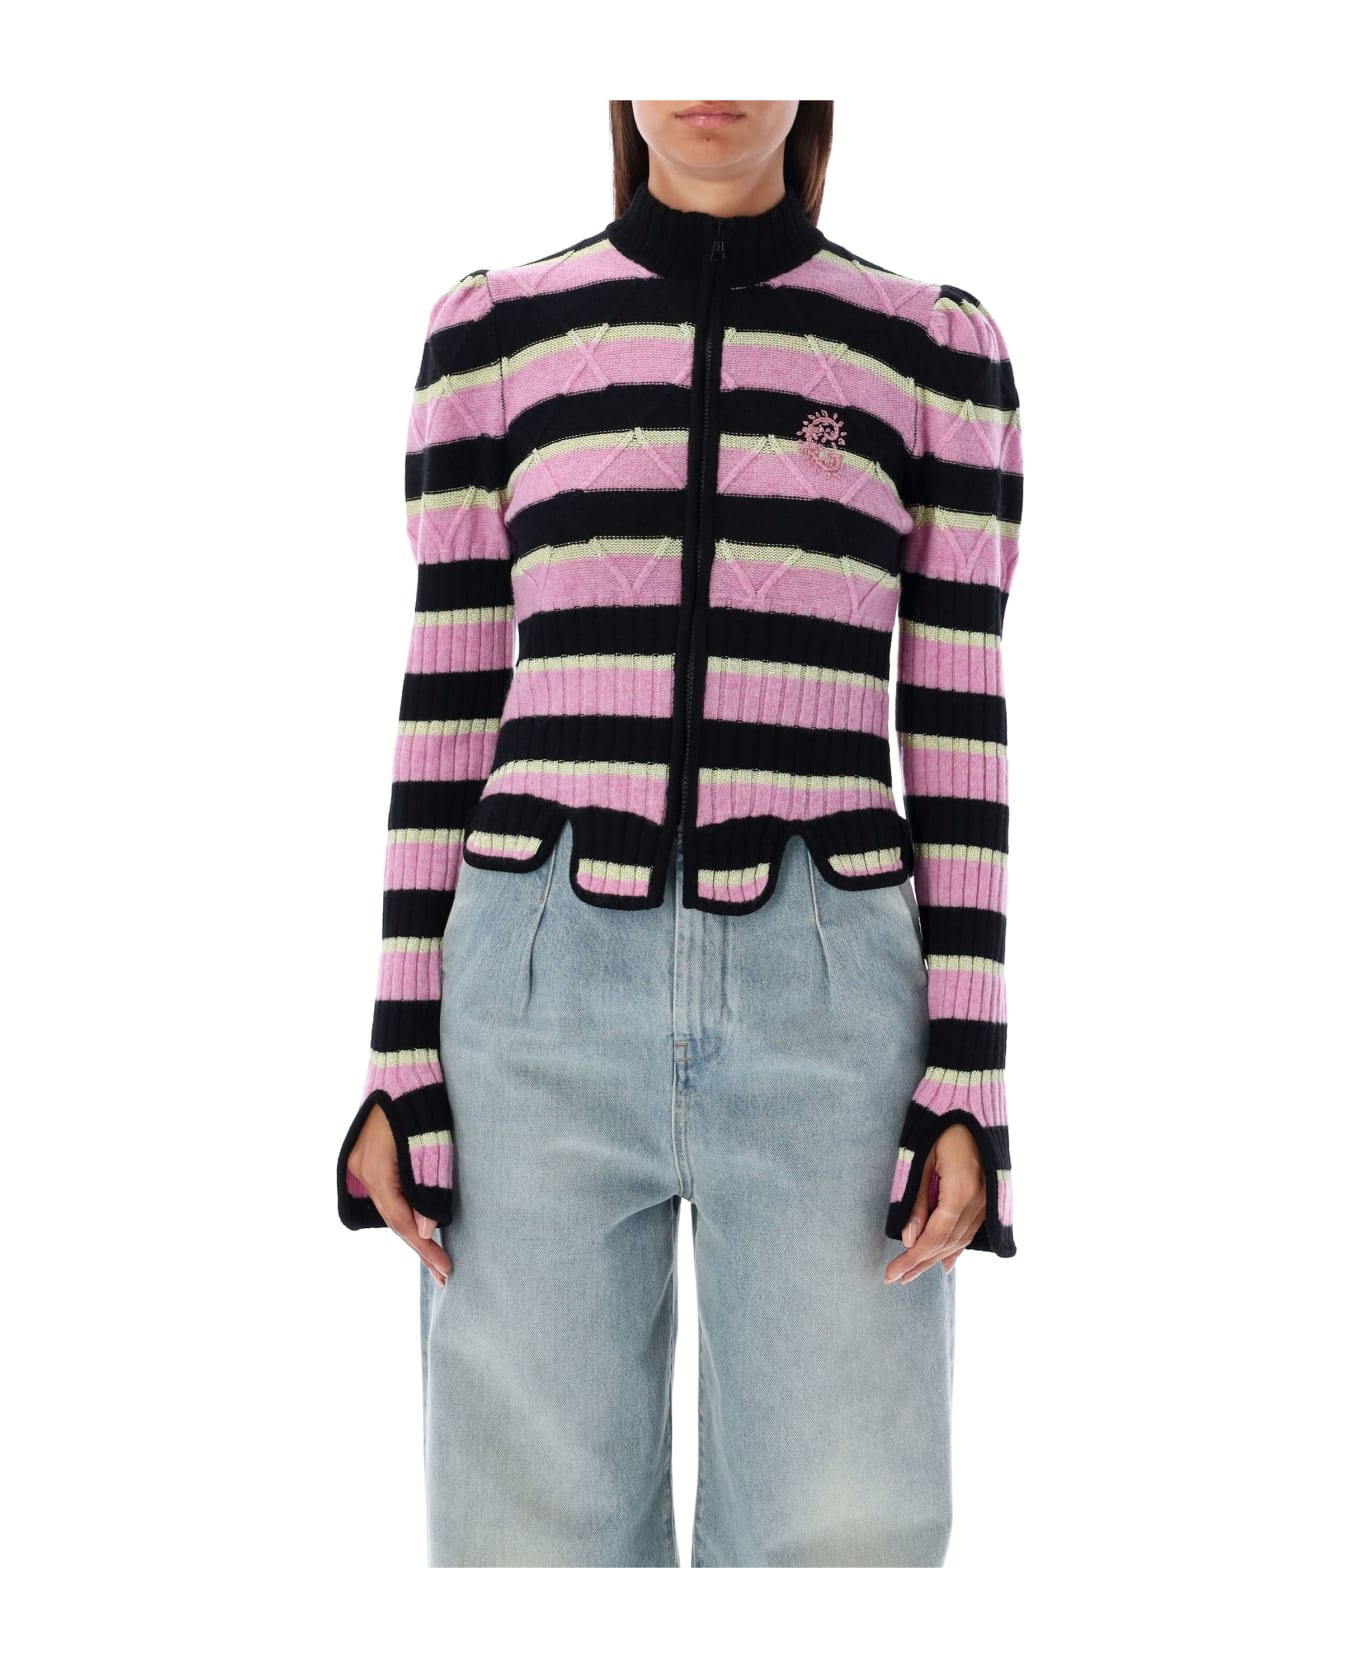 Cormio Divina Knit Zip-up Sweater - PINK/YELLOW